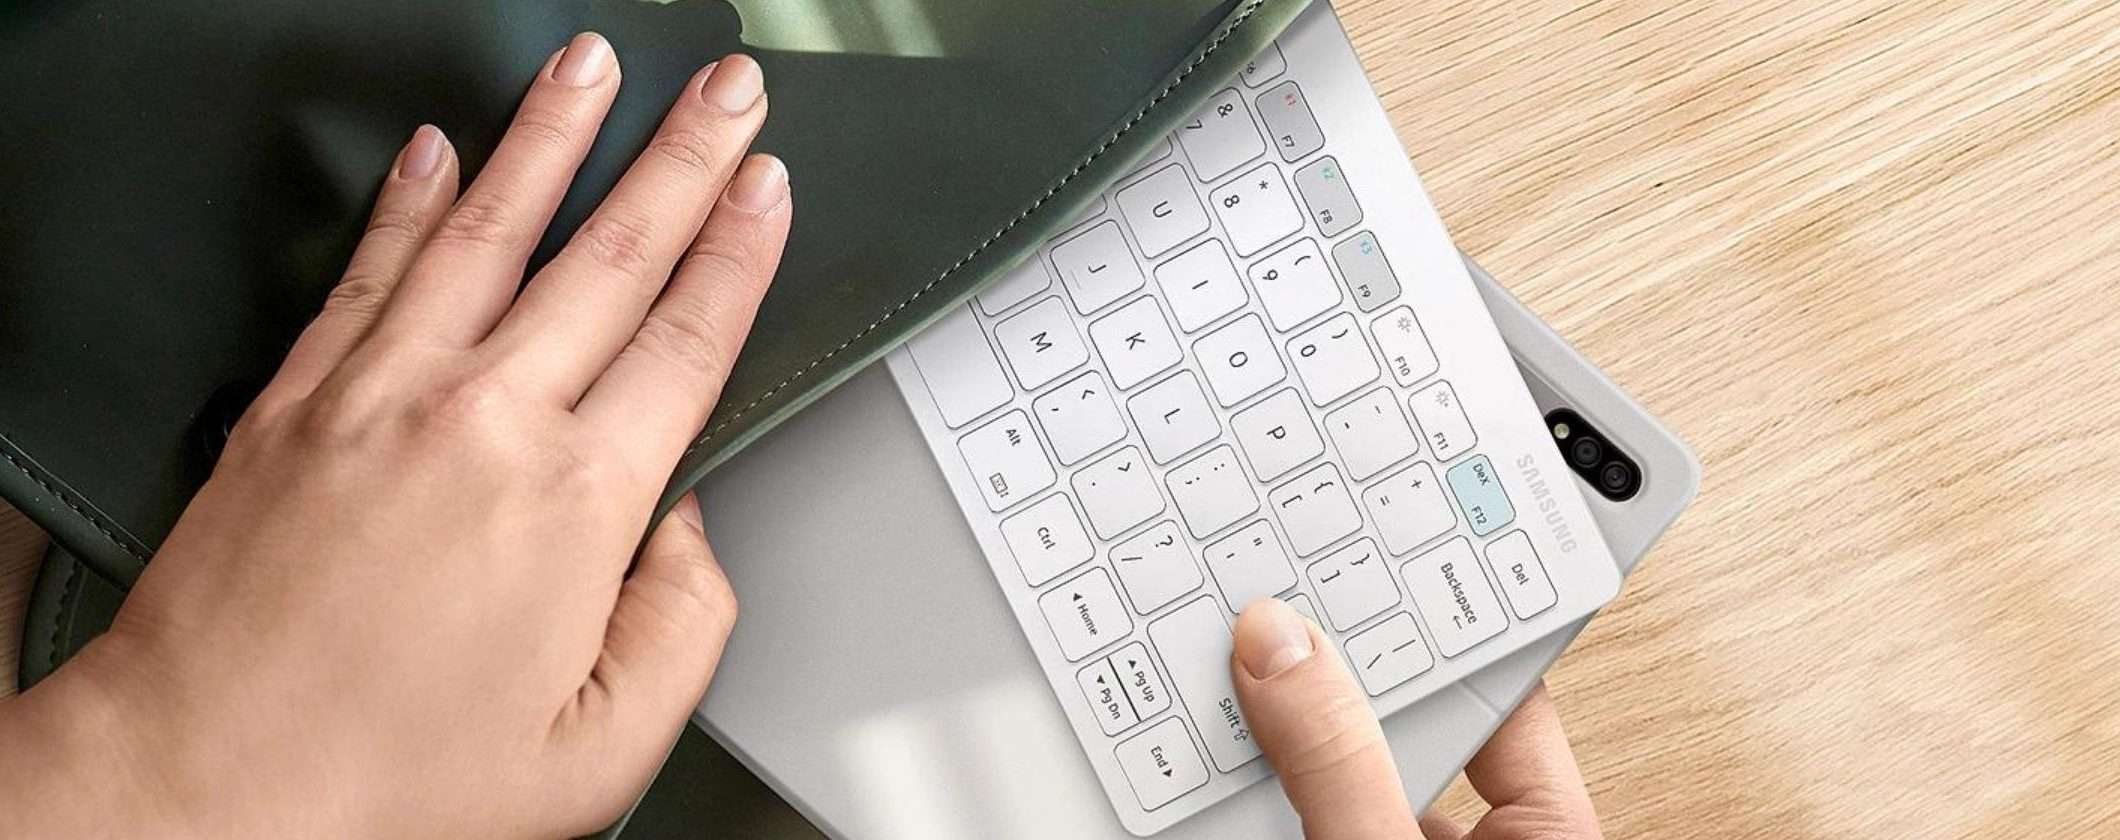 Samsung Keyboard Trio 550: tastiera multi dispositivo a soli 40€